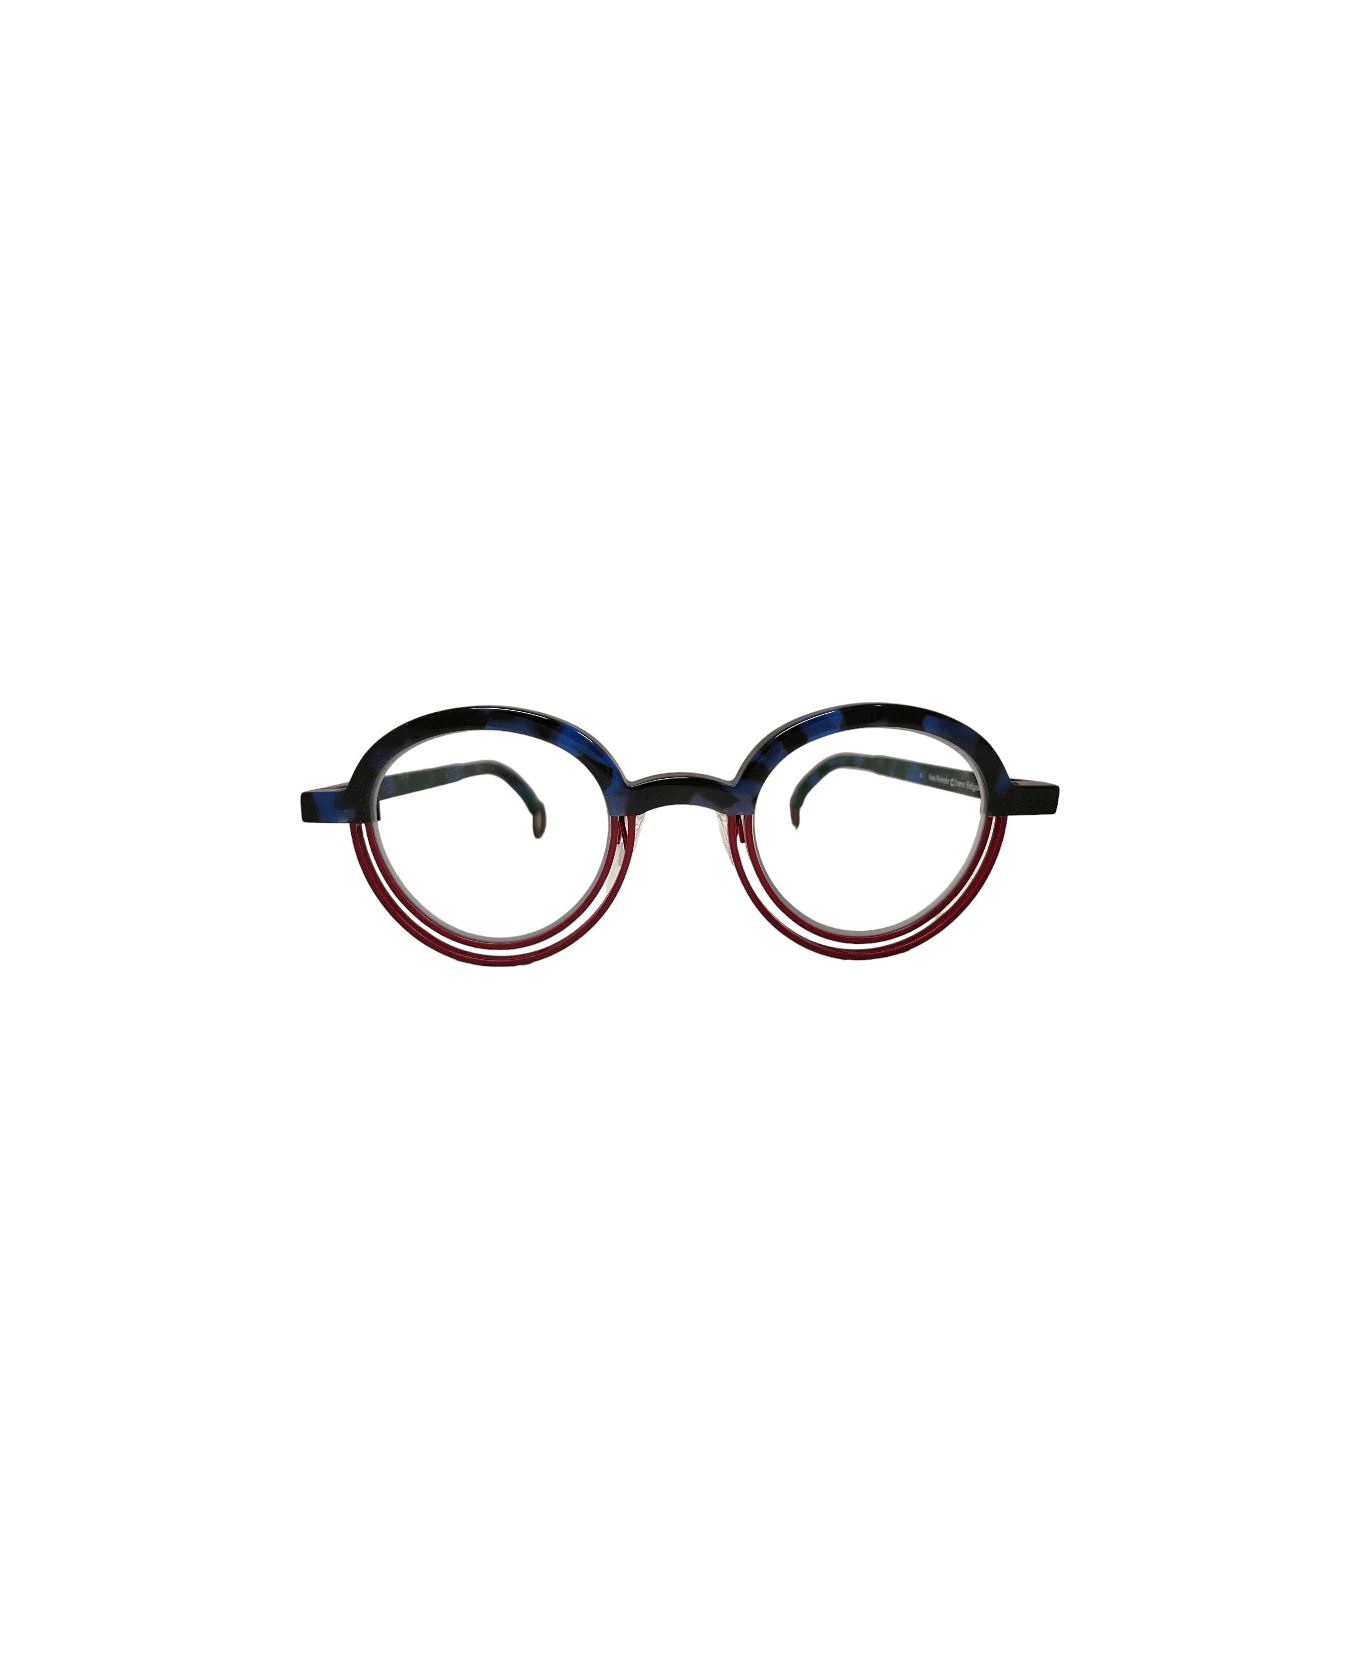 Theo Eyewear Bumper - Red & Blue Glasses